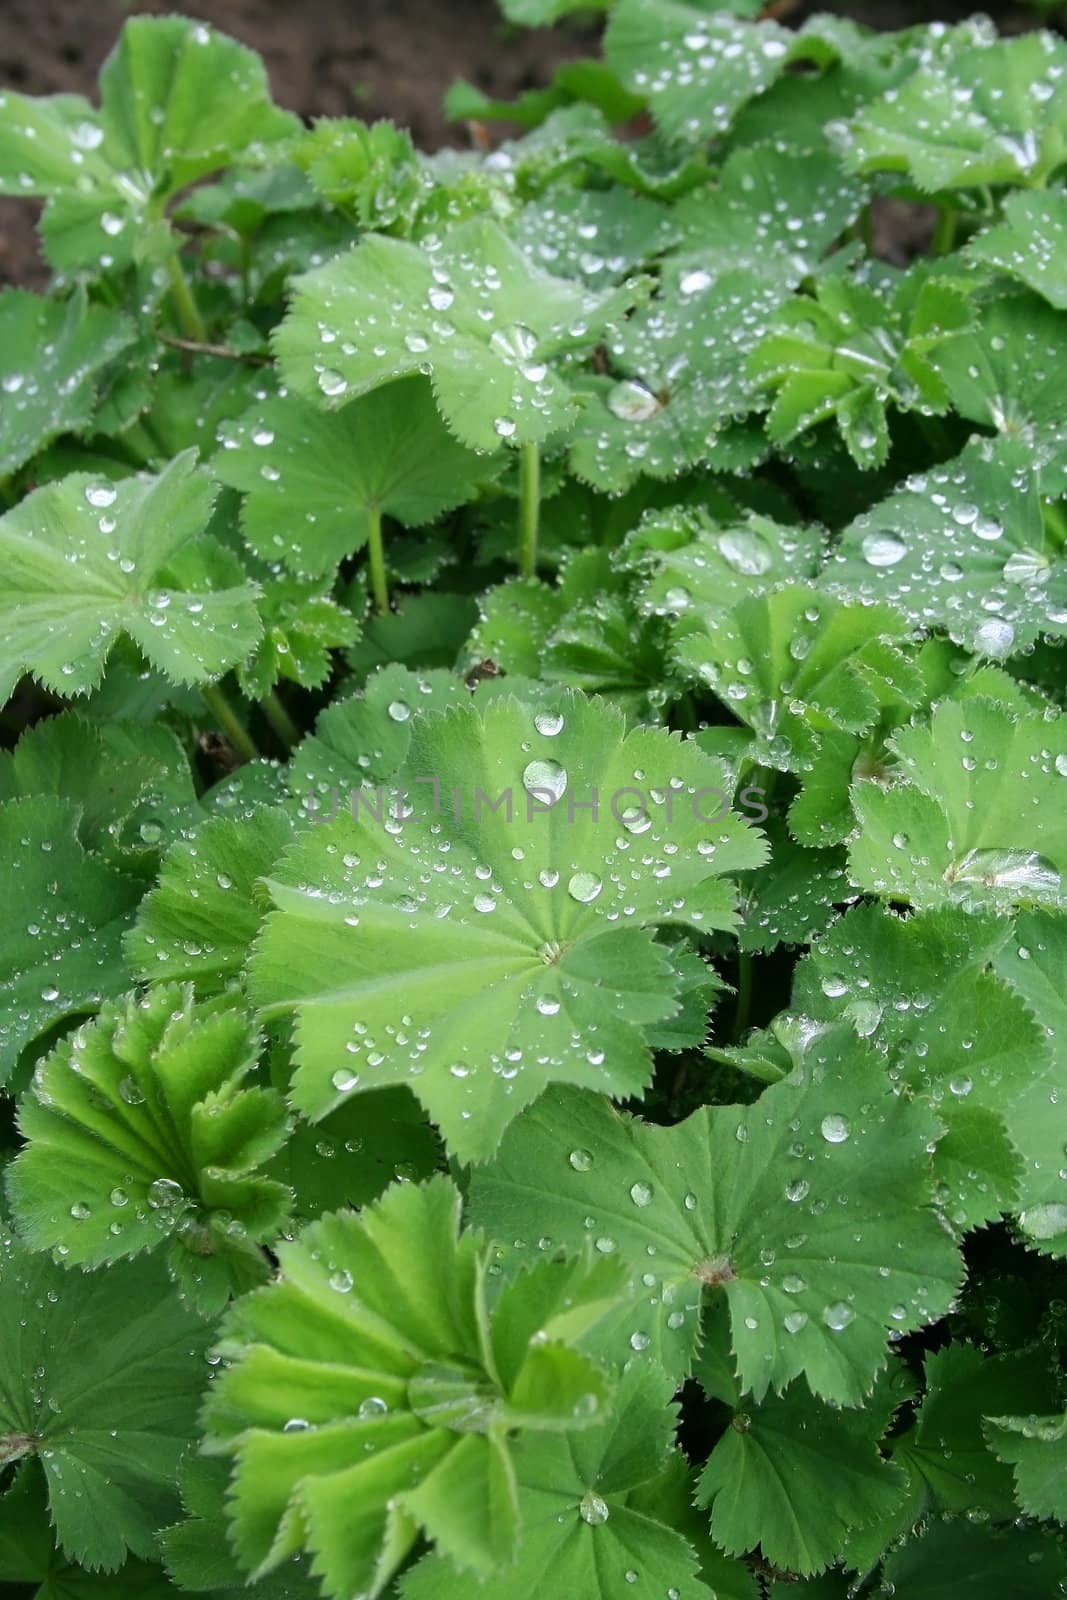 Raindrops on a lotus flower